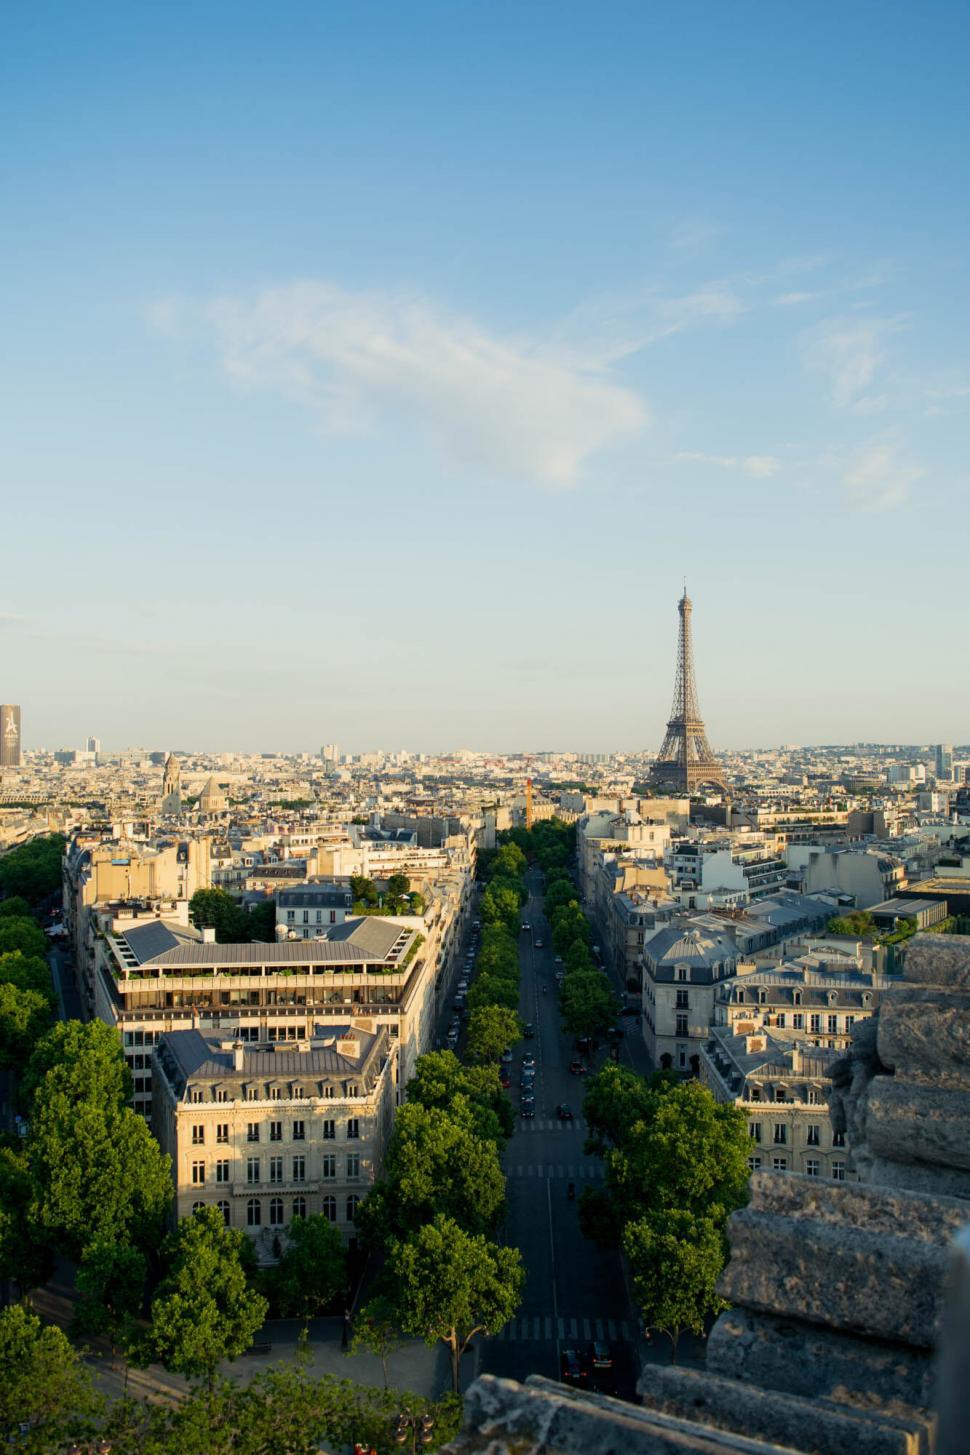 Free Image of Paris skyline with Eiffel Tower 